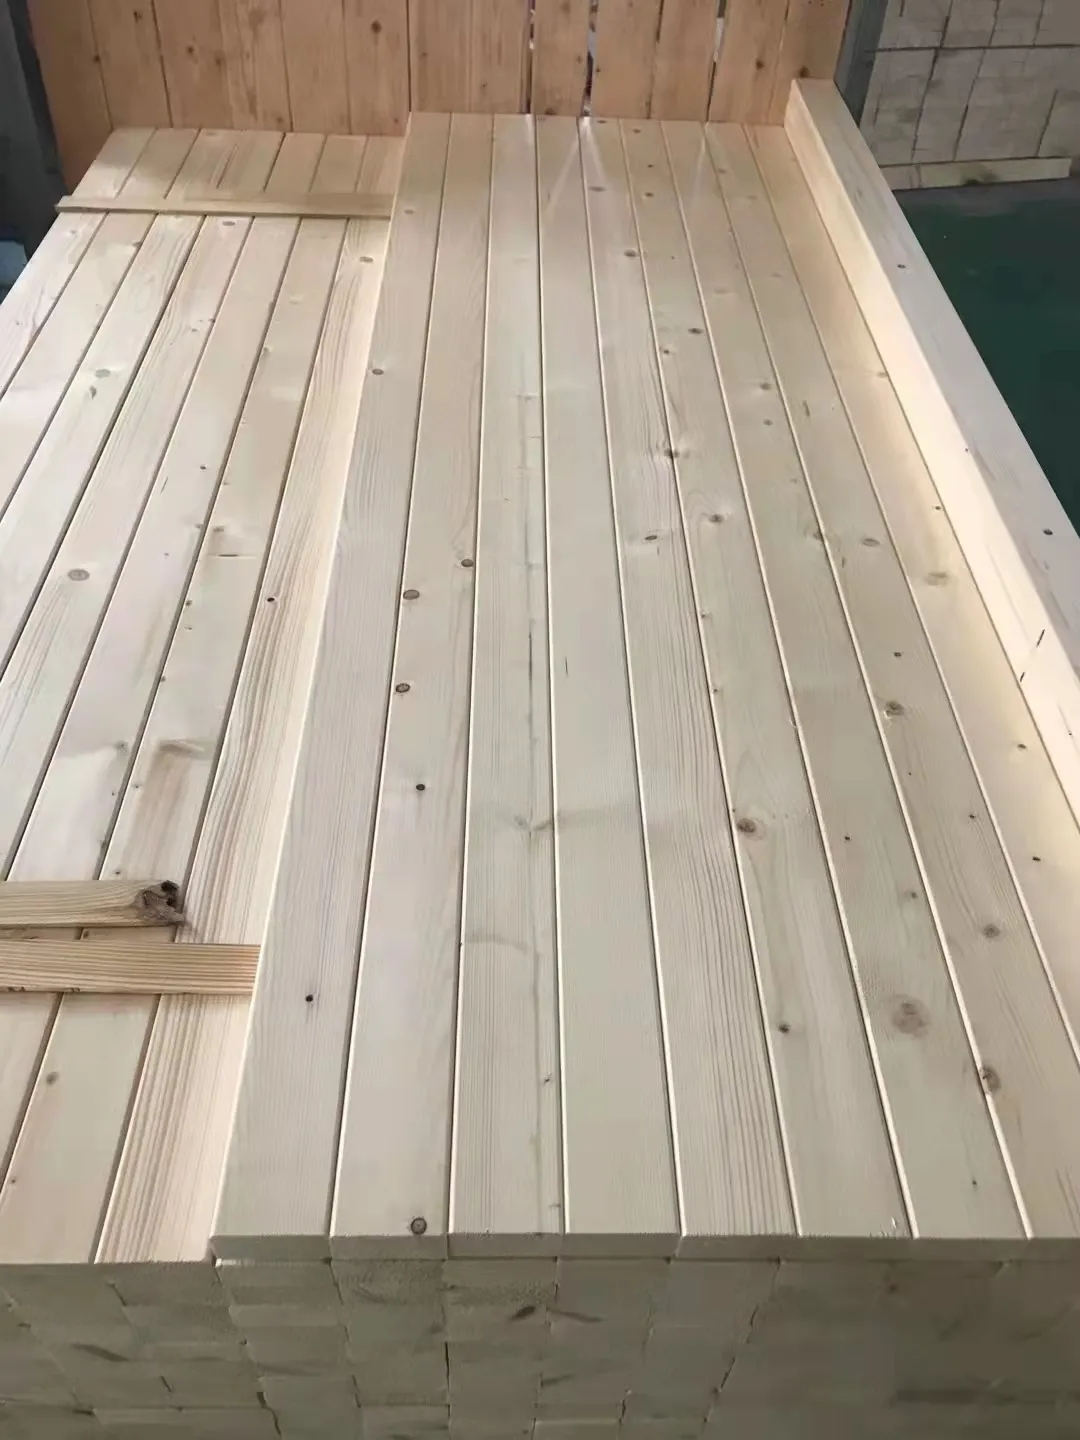 Vente de planches de bois de pin de construction d'usine de chine vente de planches de pin massif